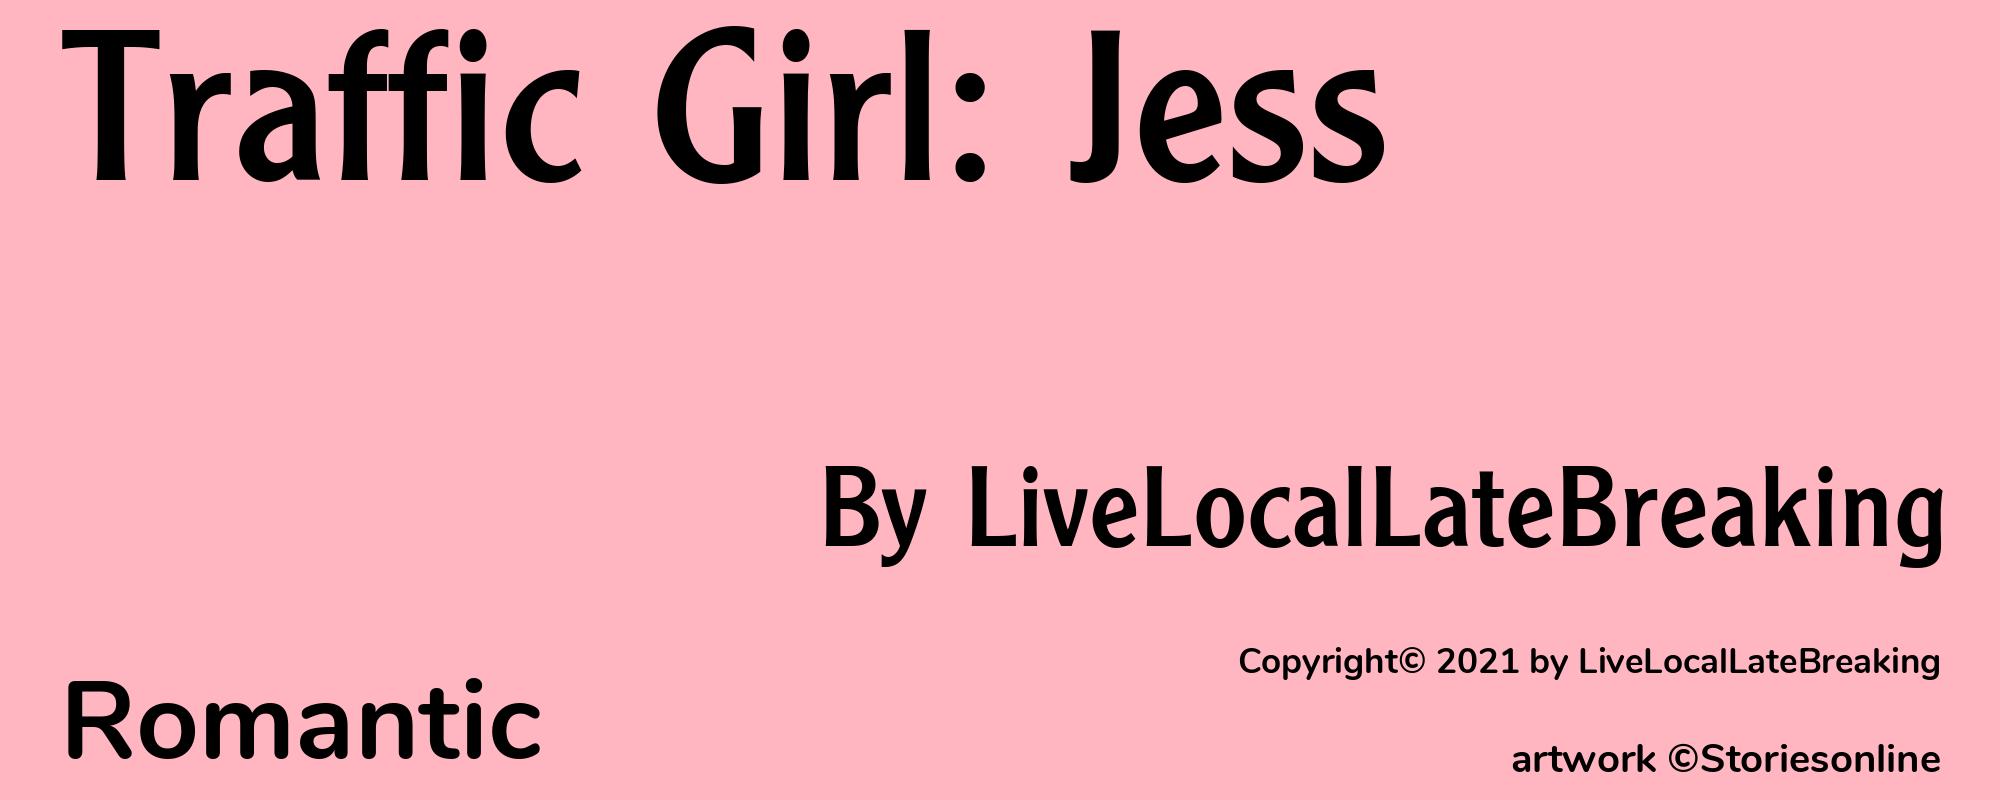 Traffic Girl: Jess - Cover